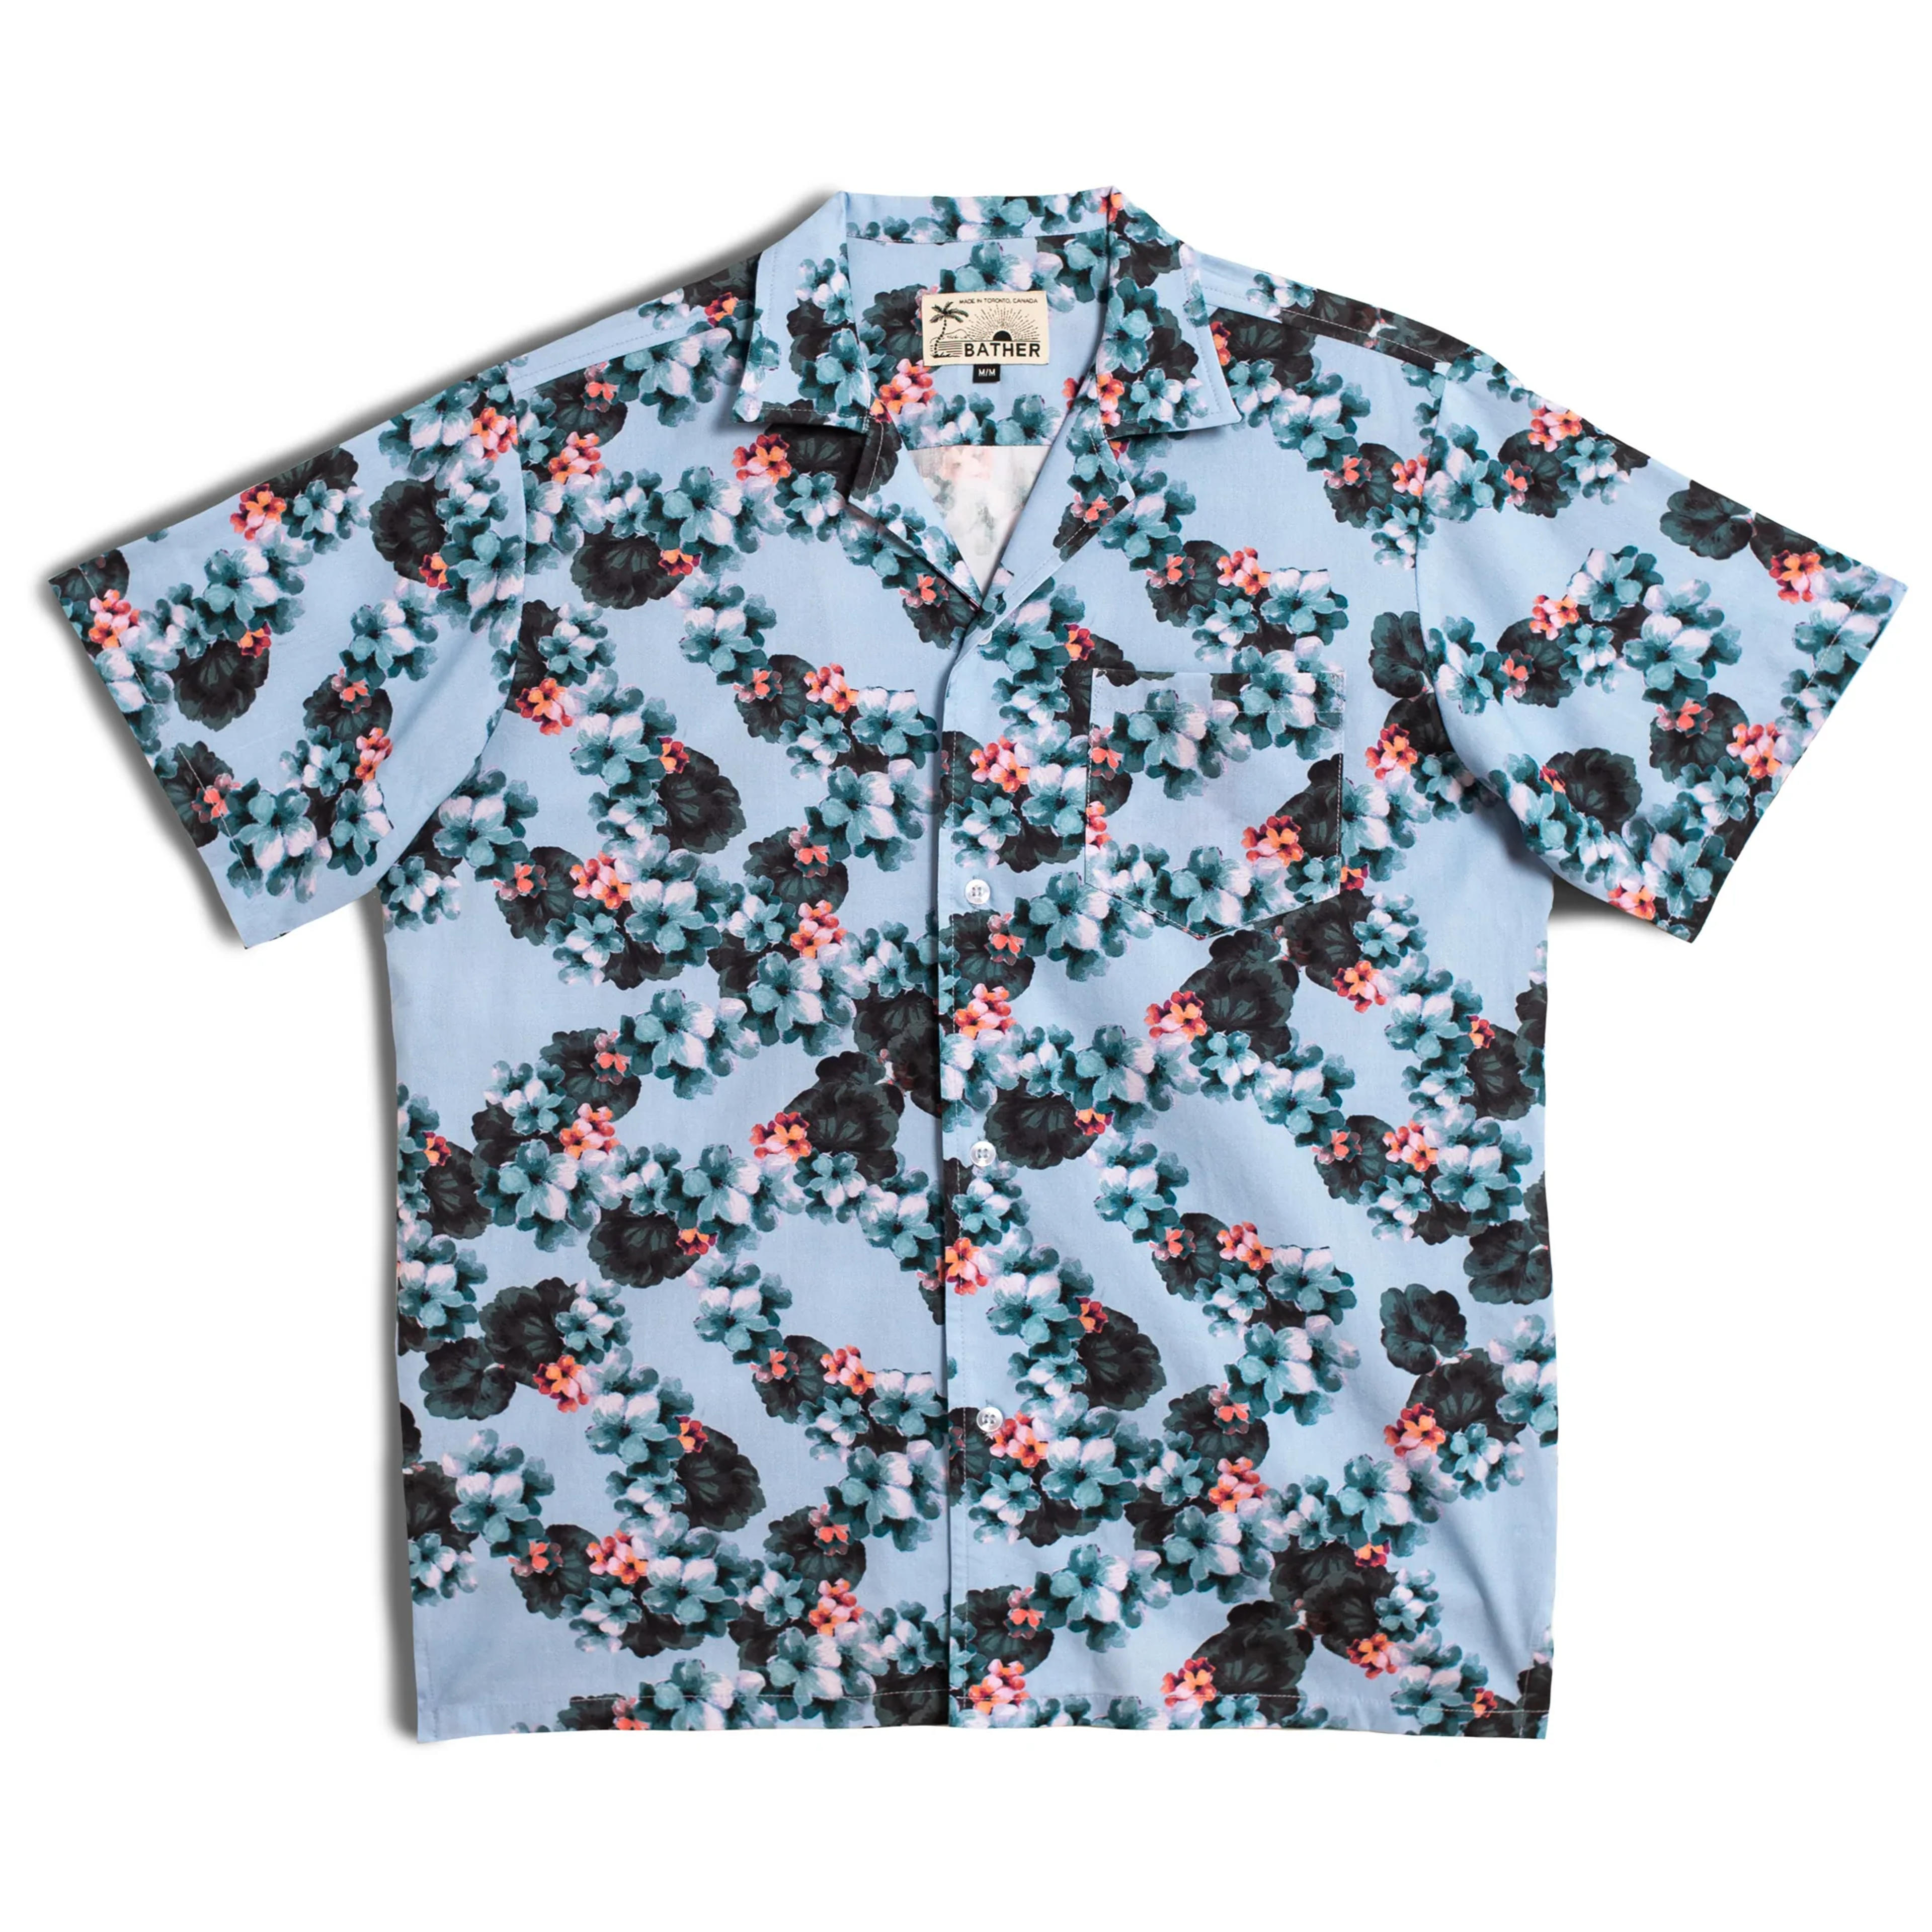 Powder Blue Floral Lei Camp Shirt - L